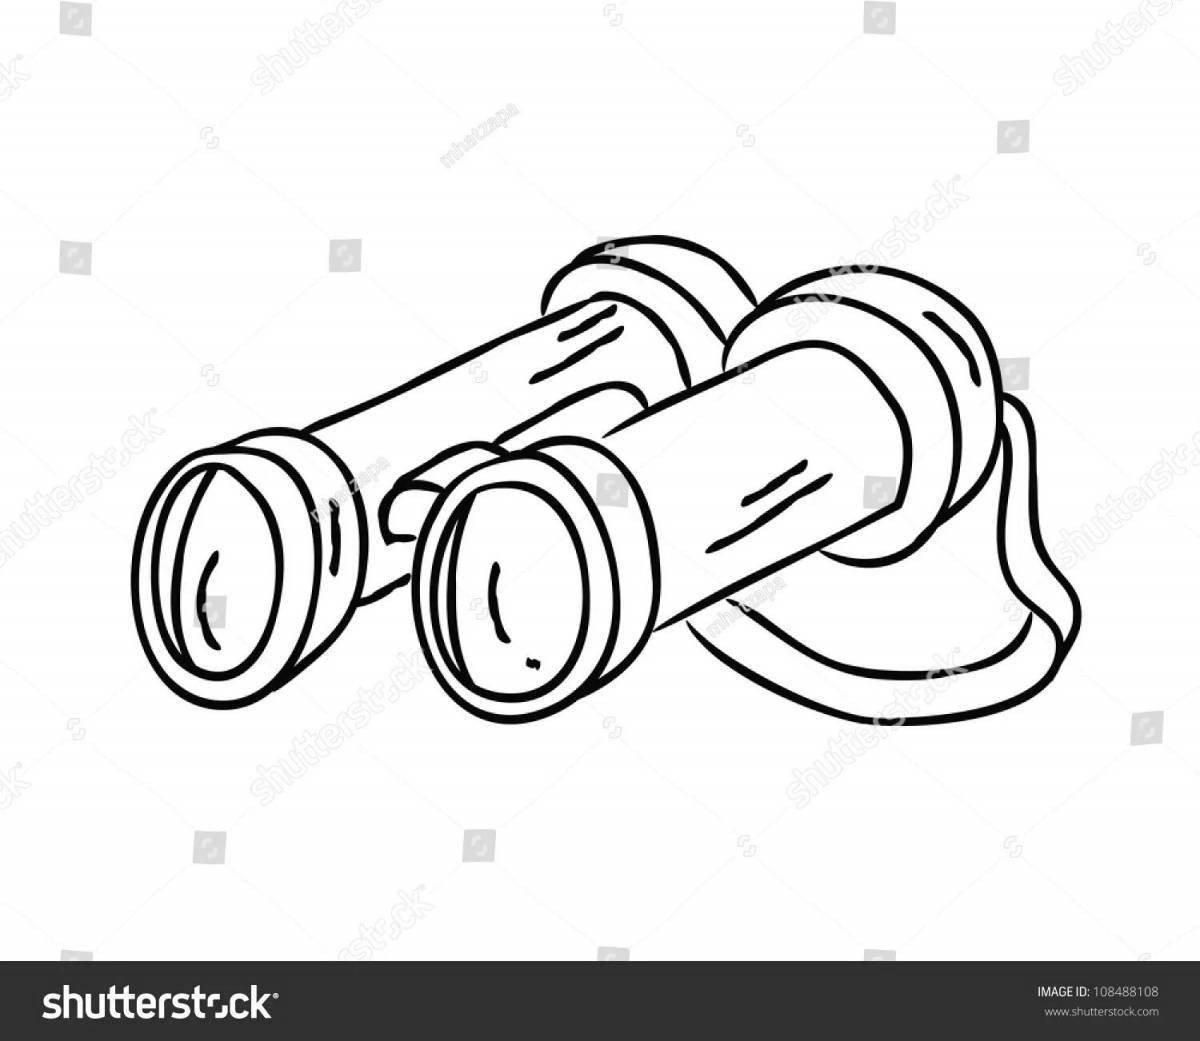 Creative binoculars coloring book for preschoolers